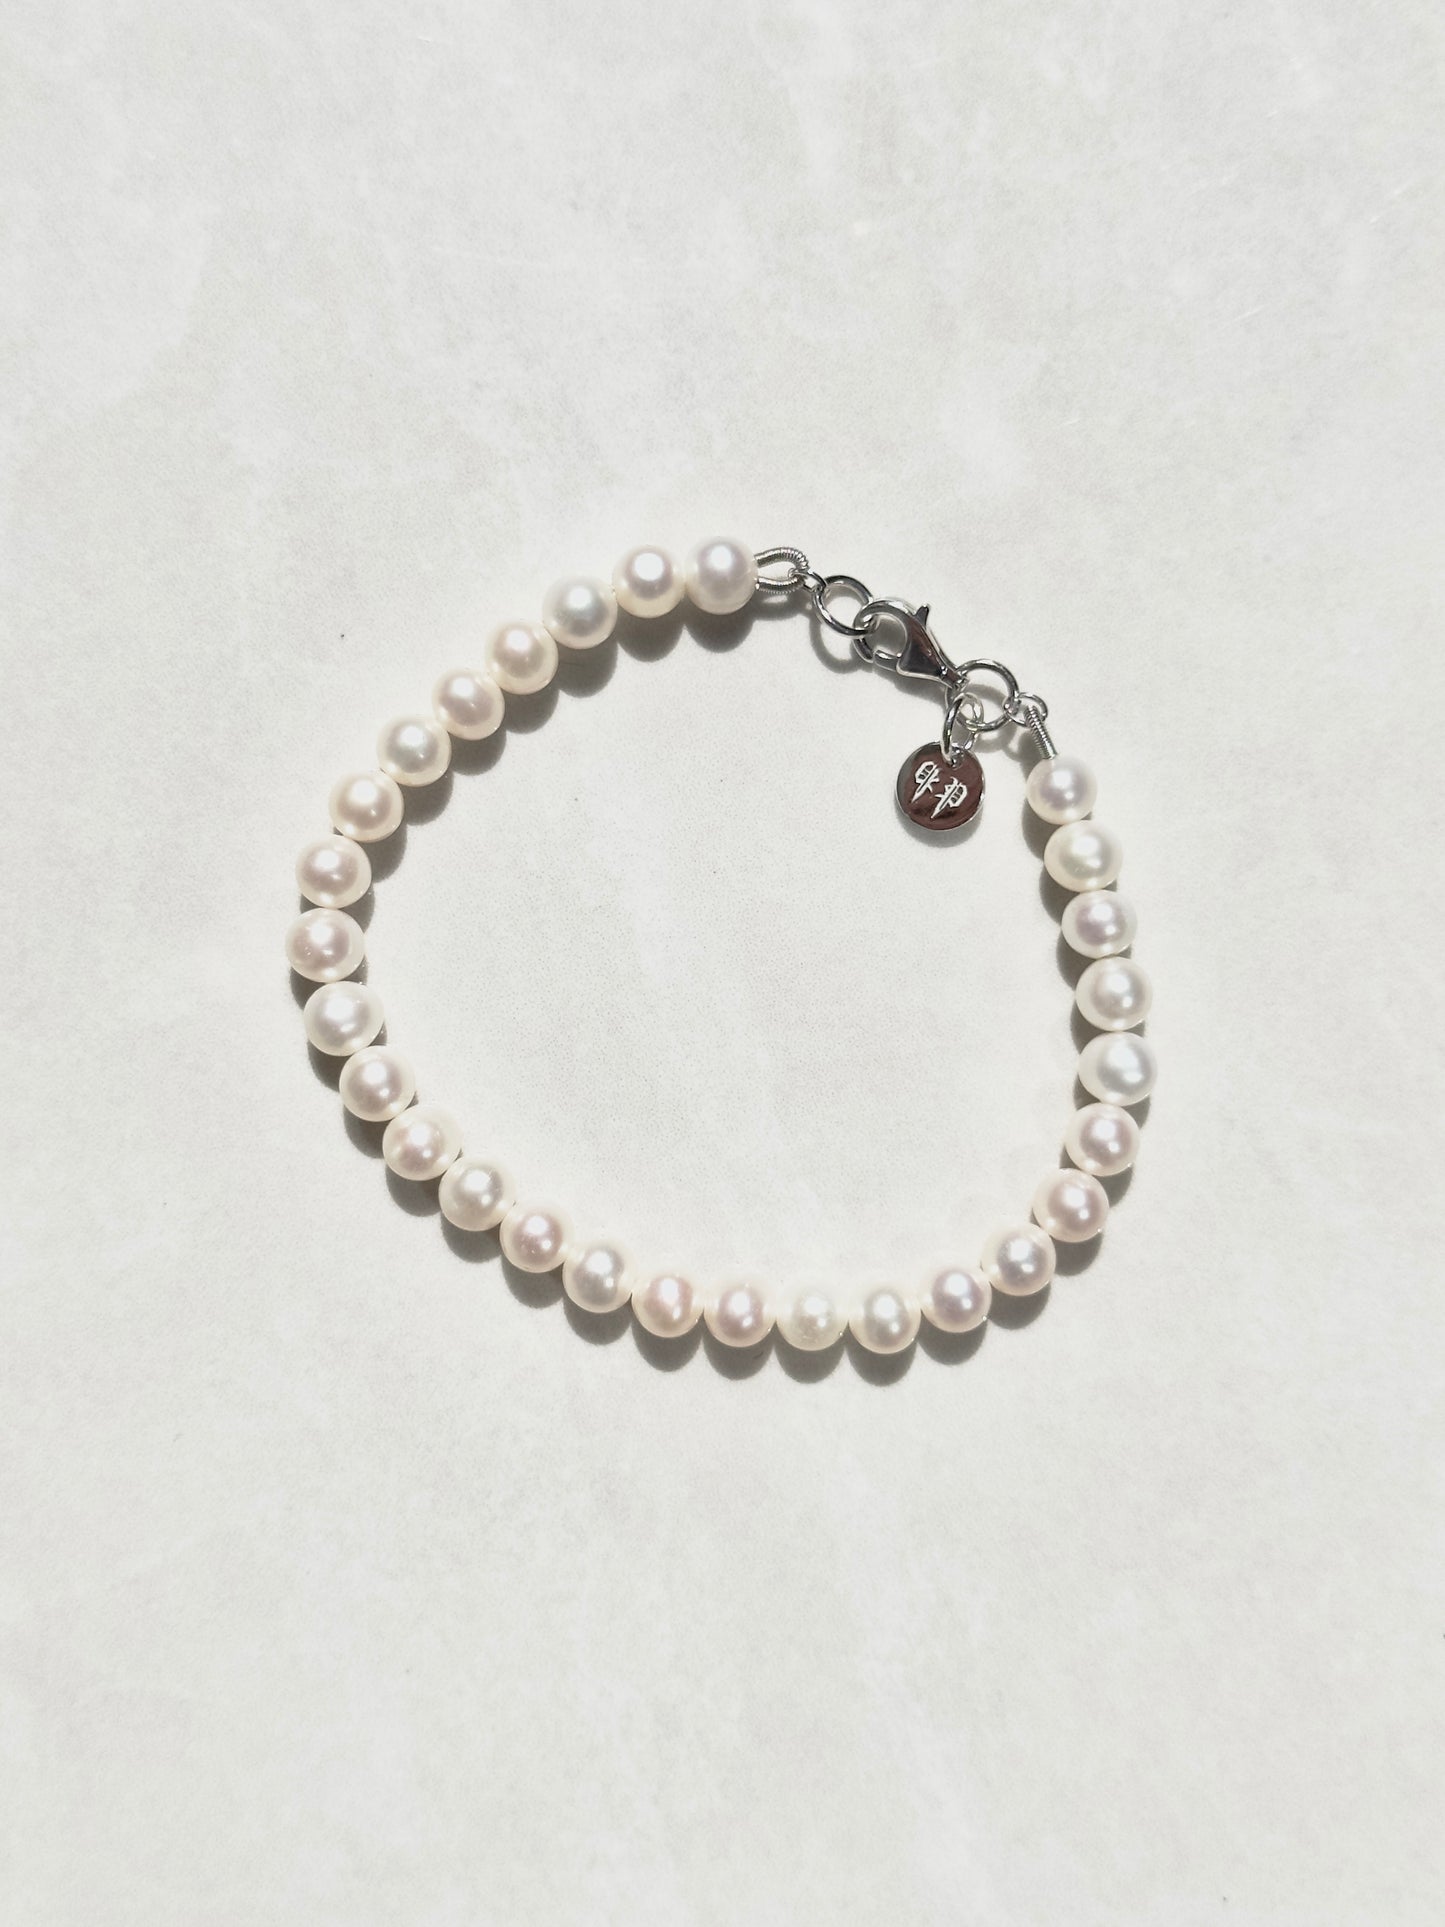 Statement Half Rose Gold Chain Half Natural Pearl Bracelet - Mesmerize